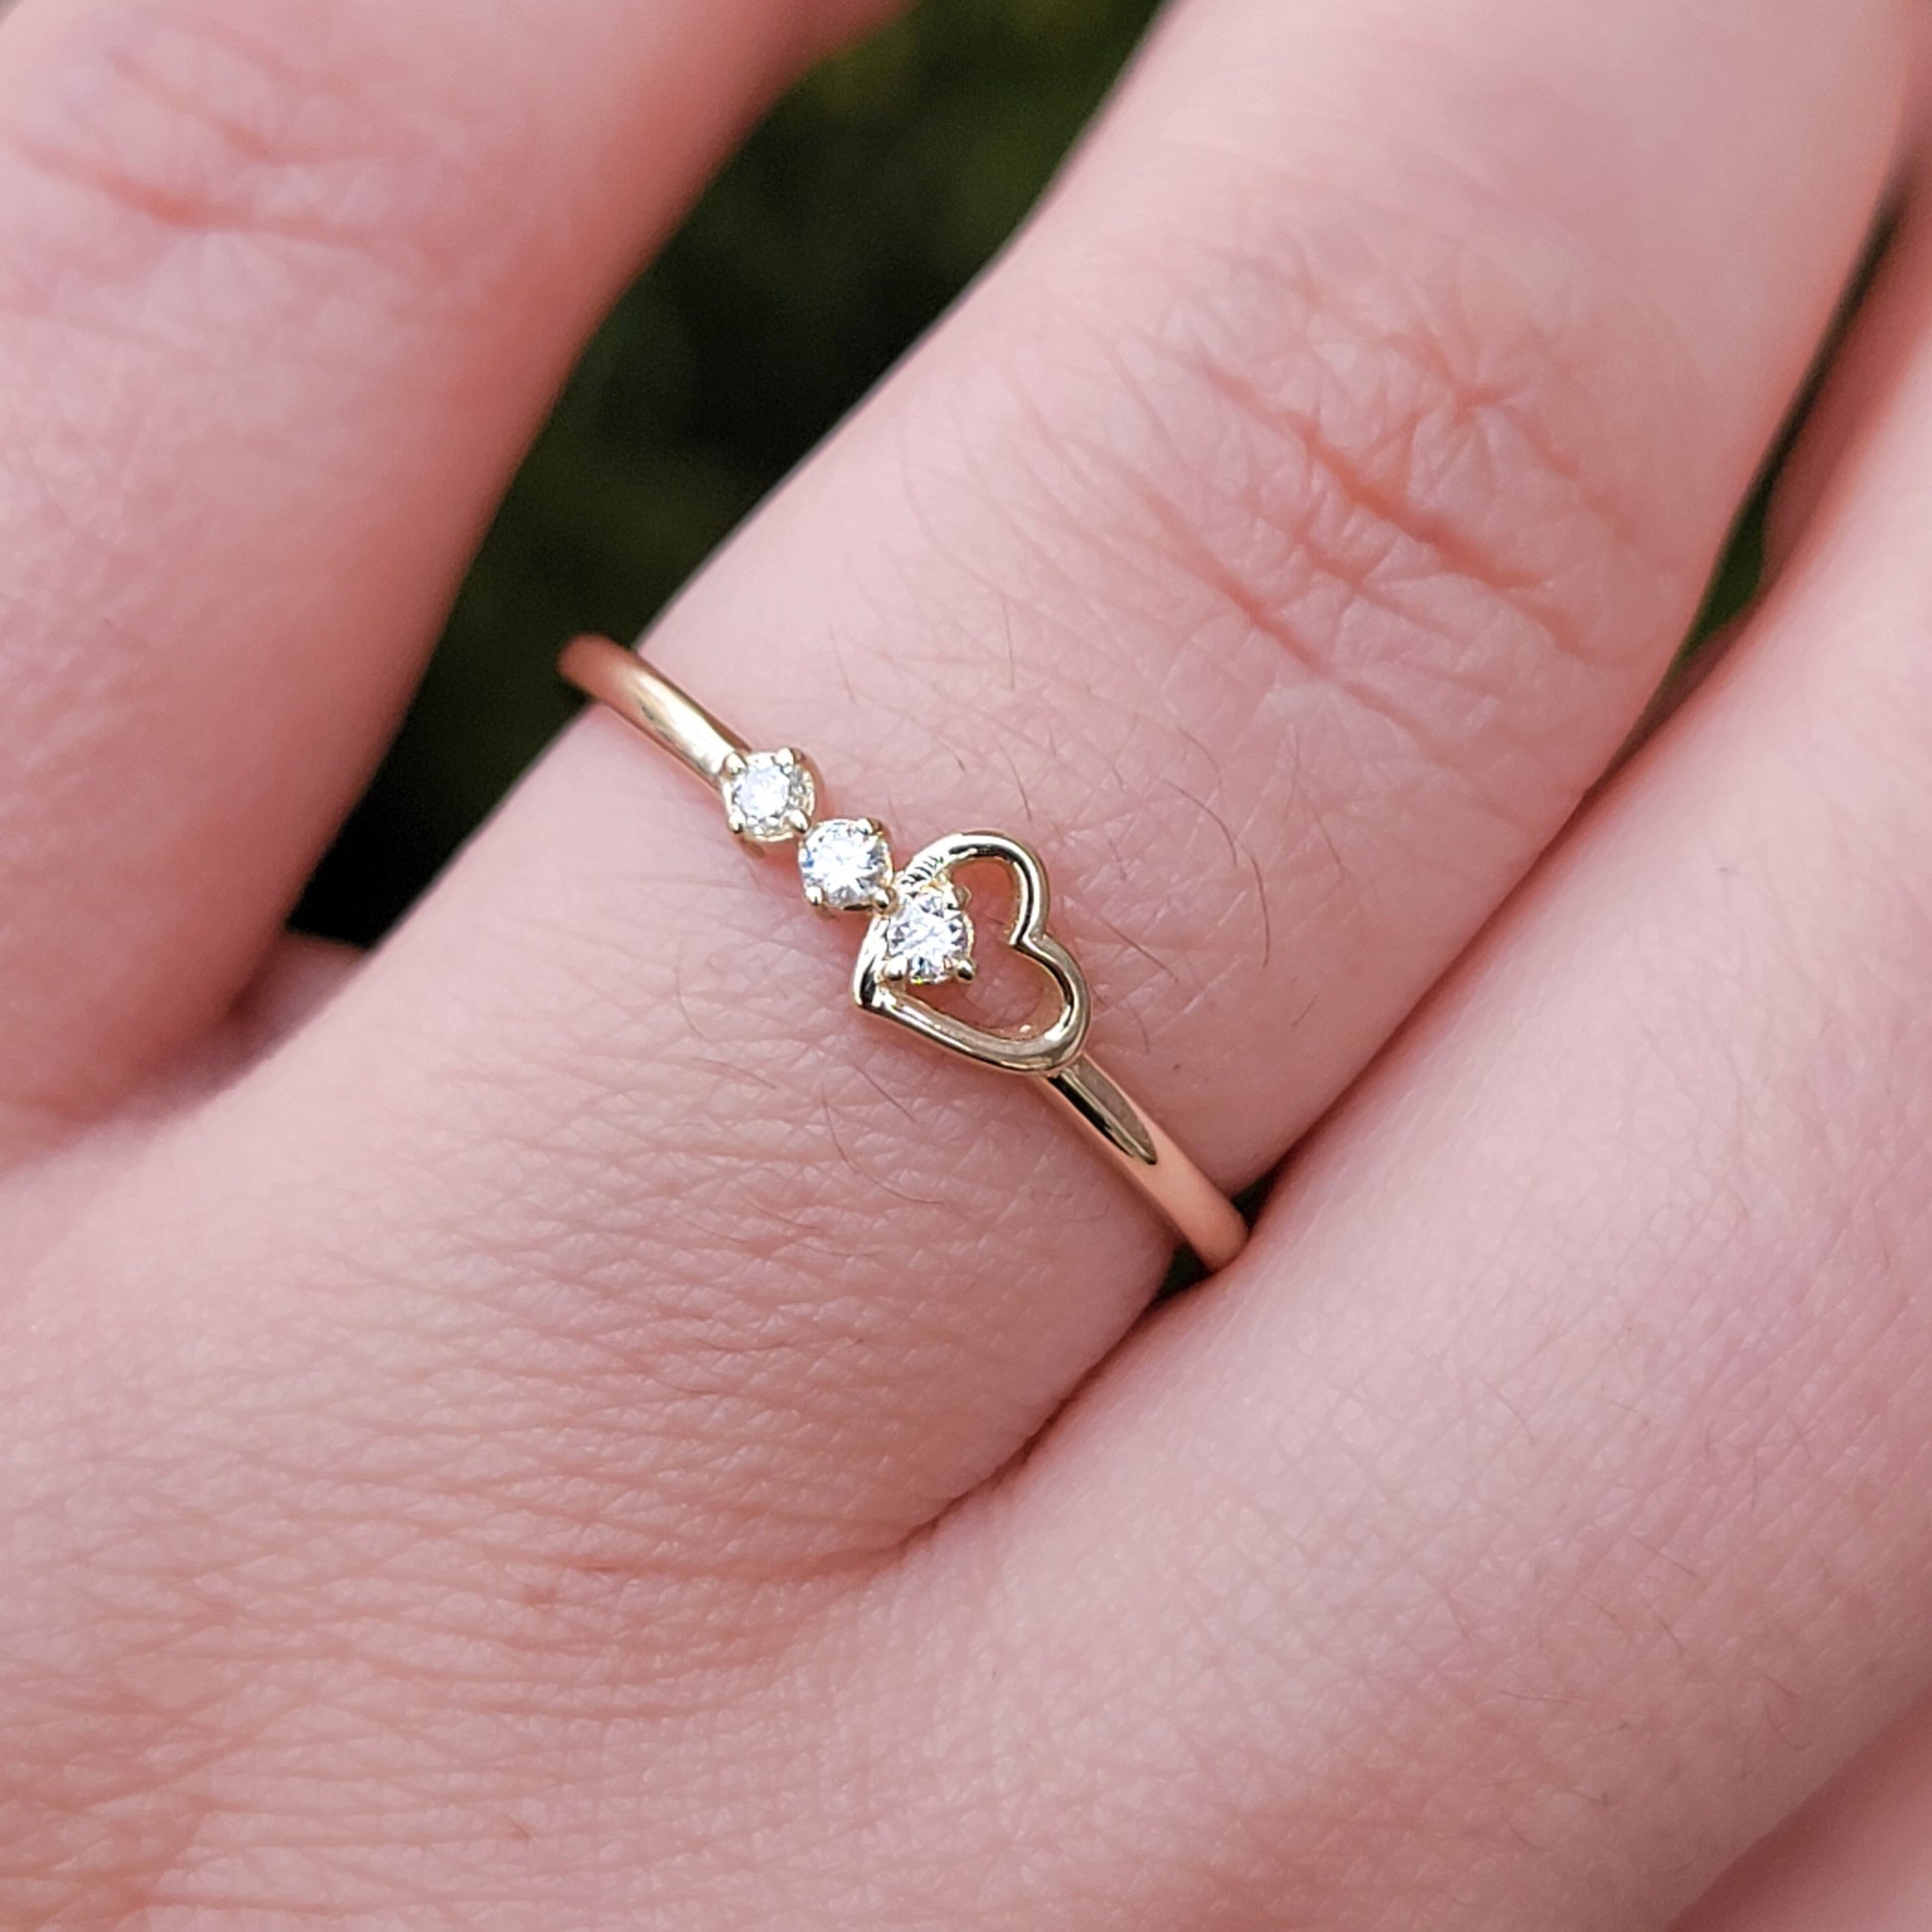 14k Gold Diamond Heart Ring, Dainty Heart Ring, Minimalist Diamond Ring, Statement Ring, Promise Ring for Her